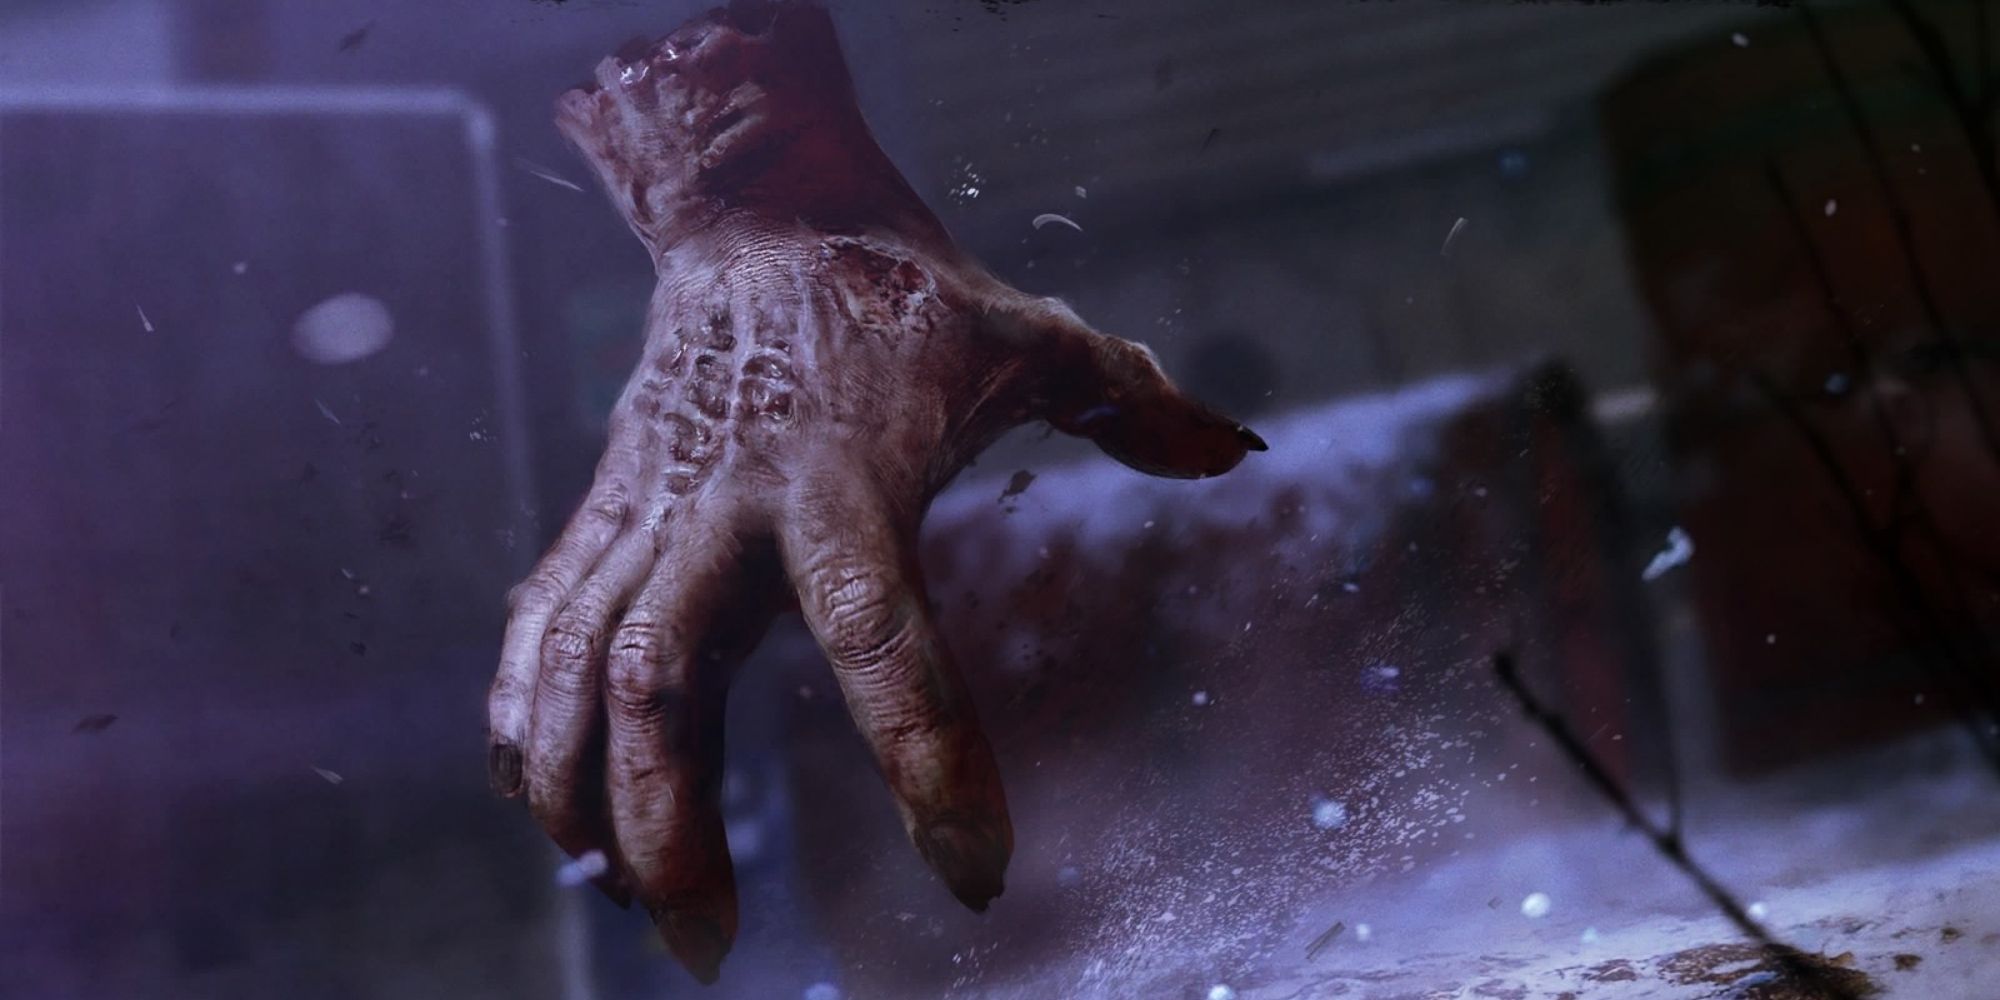 Meet the Kandarian Demon in the new trailer for Evil Dead: The Game